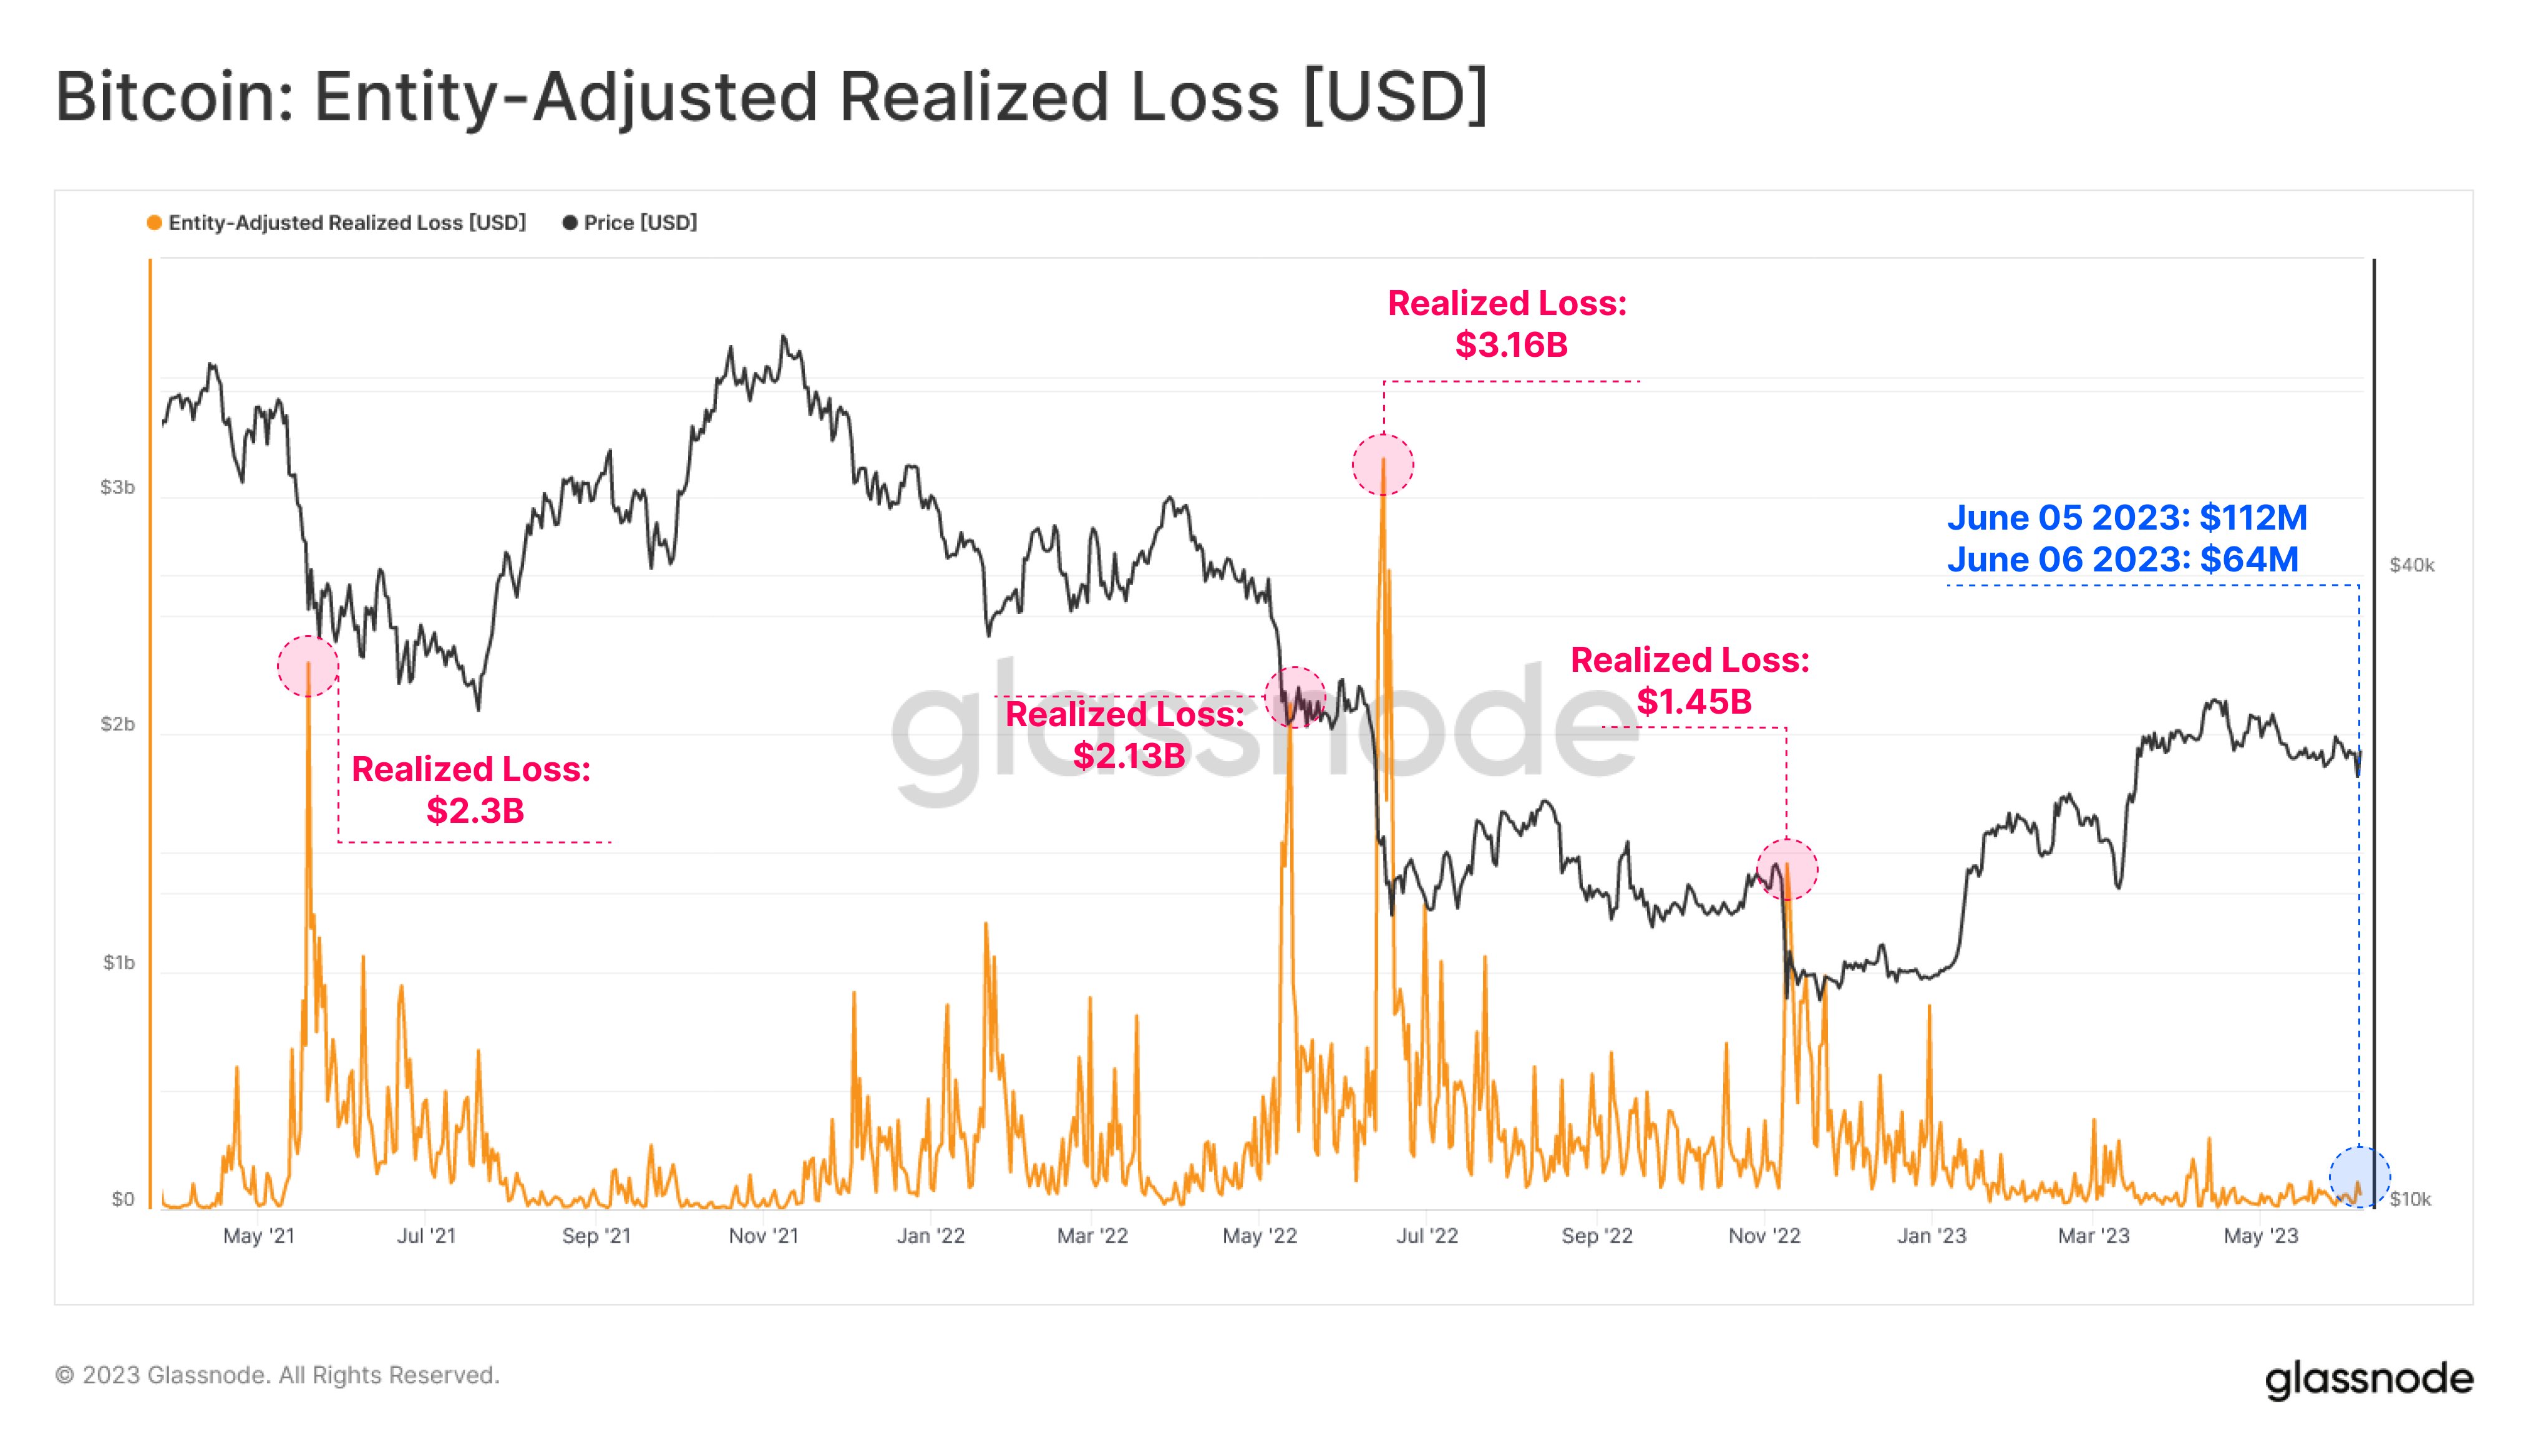 Bitcoin Realized Loss